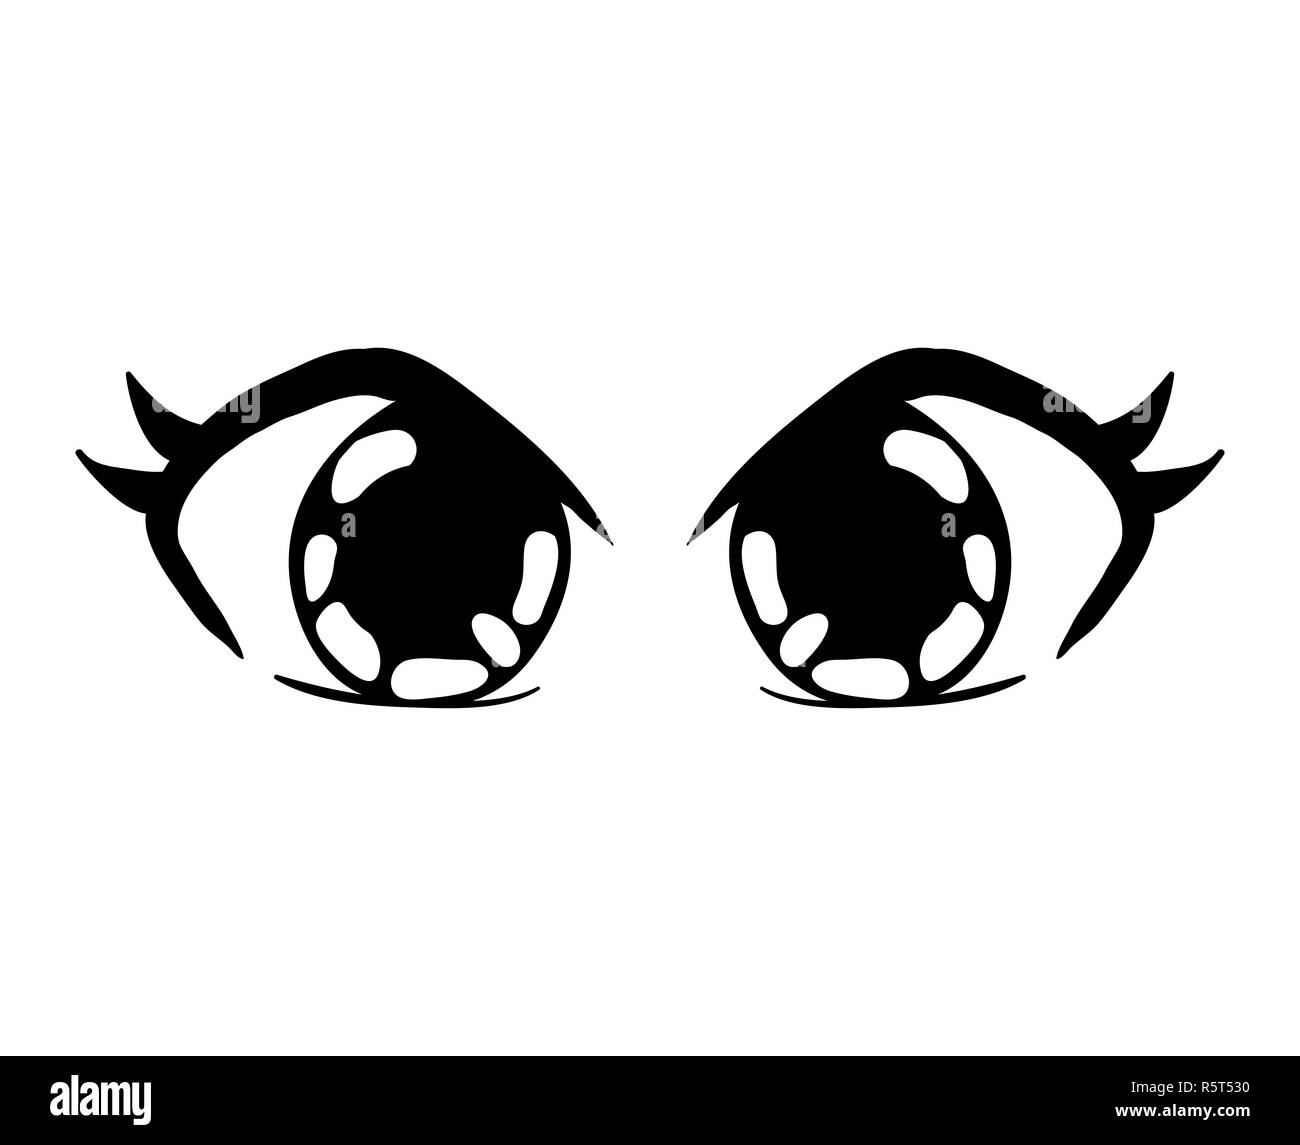 Anime eyes Black and White Stock Photos & Images - Alamy